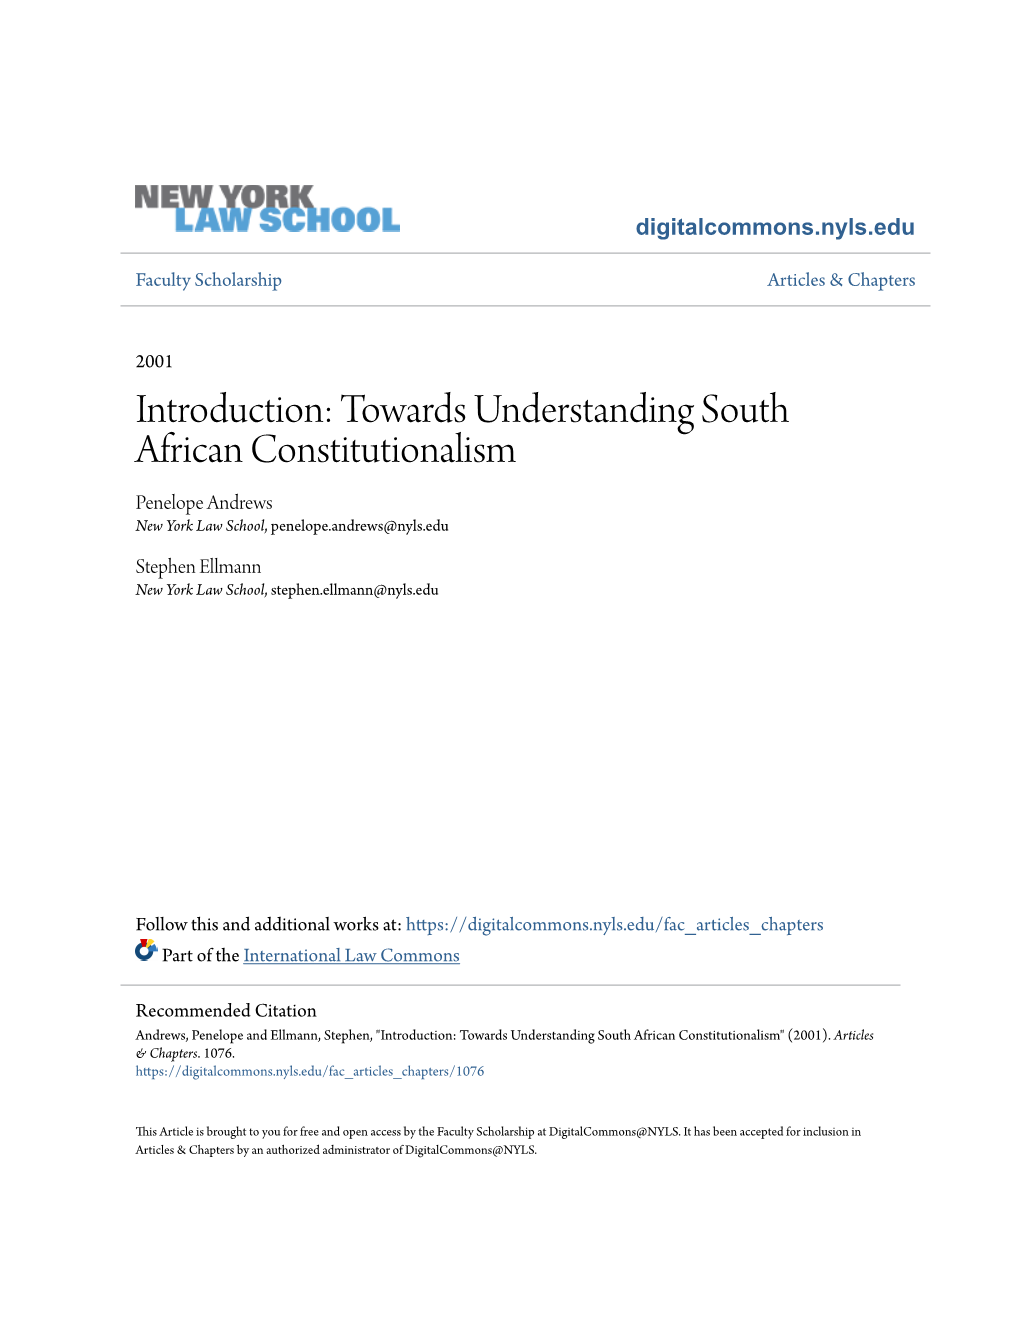 Towards Understanding South African Constitutionalism Penelope Andrews New York Law School, Penelope.Andrews@Nyls.Edu